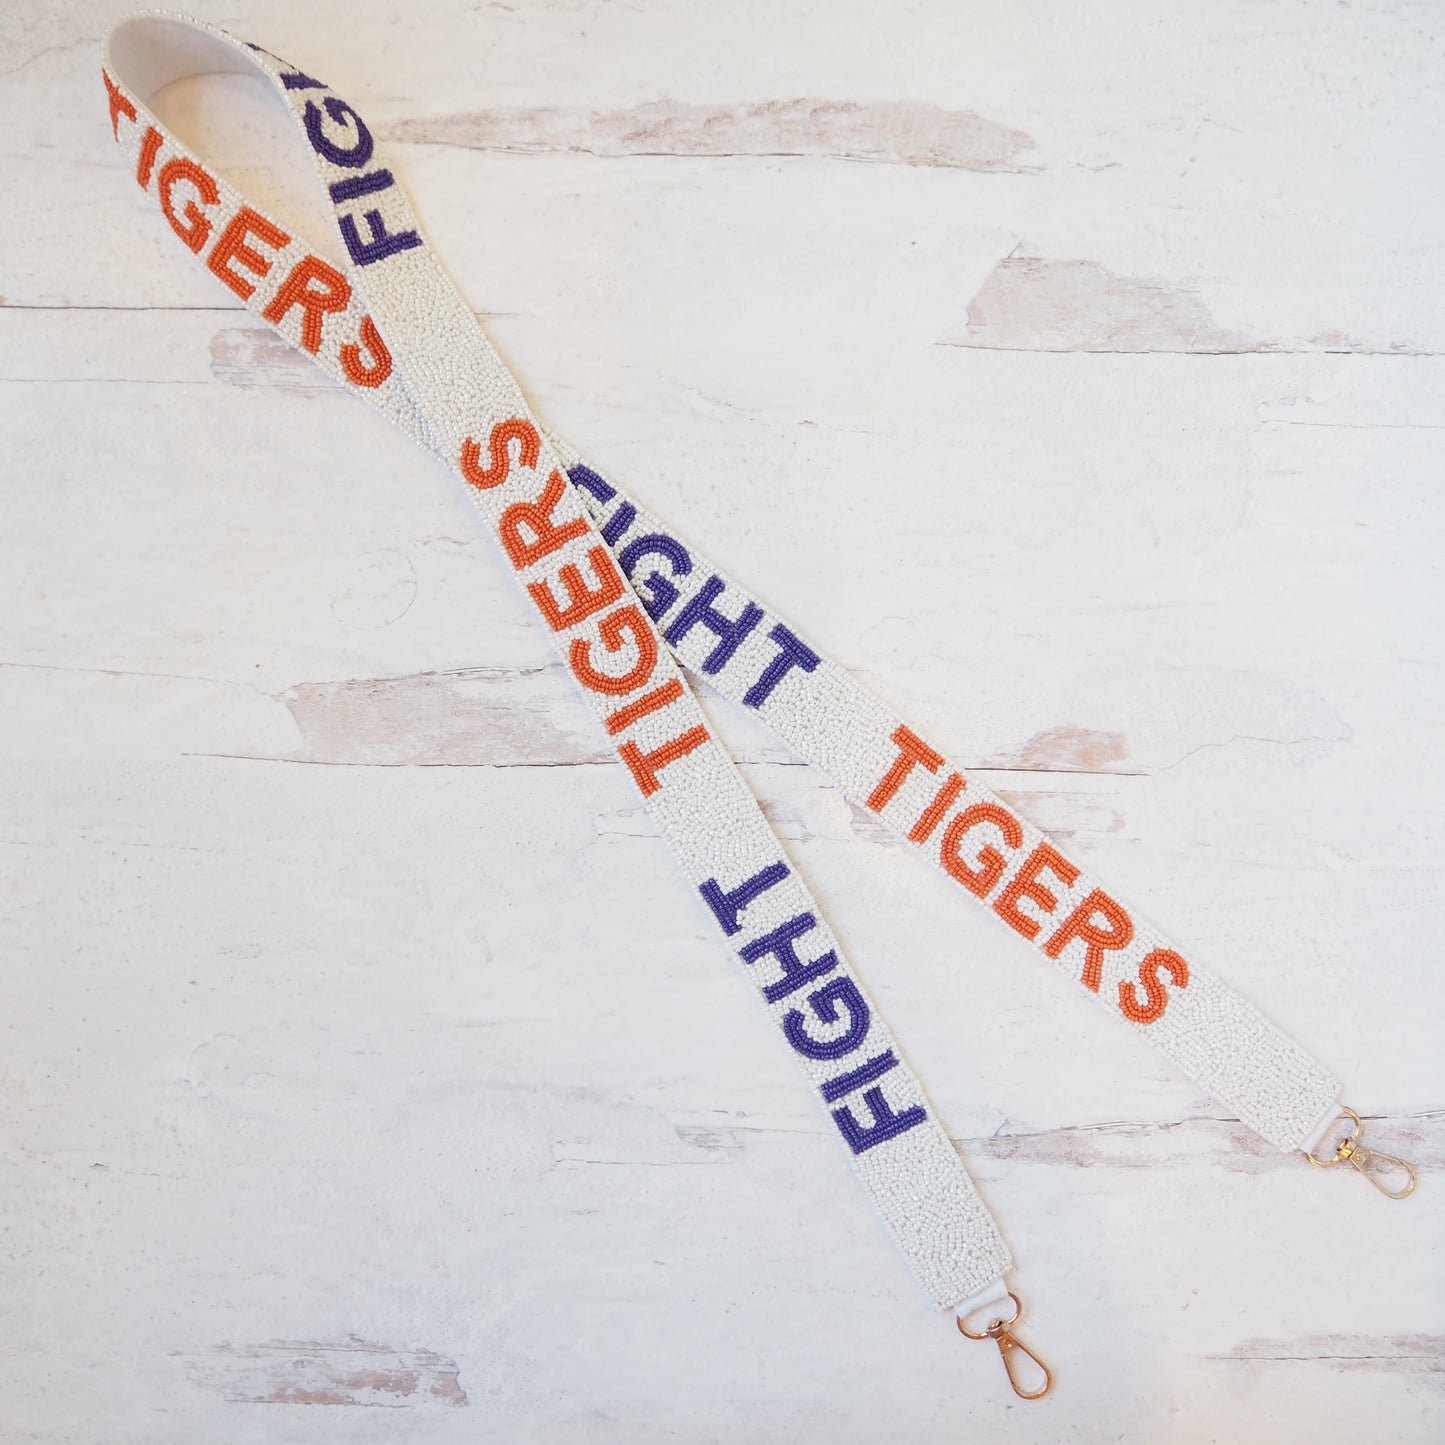 Beaded Fight Tigers Purse Strap~SALE